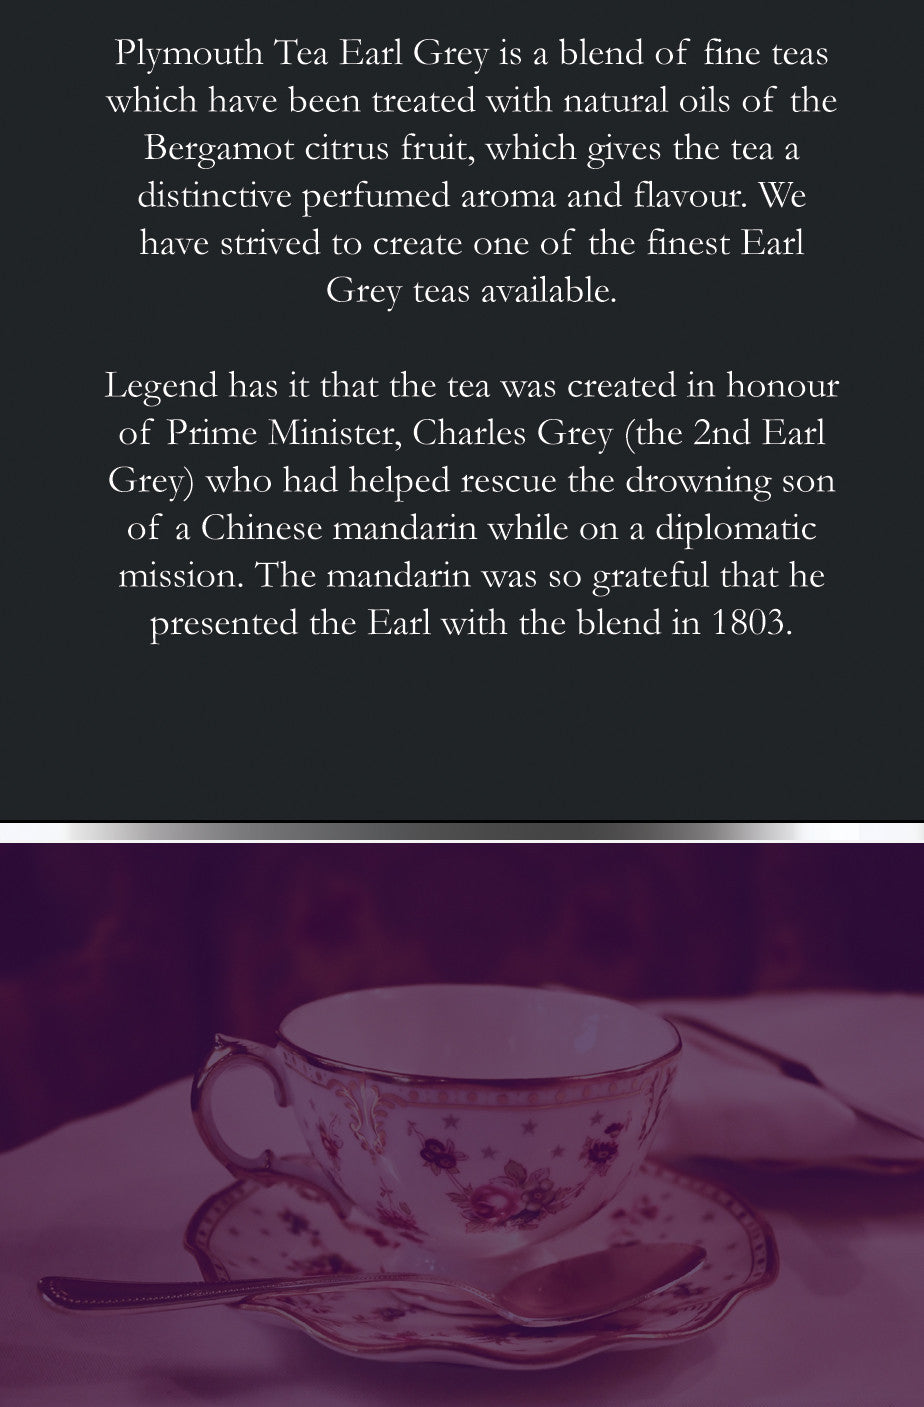 Plymouth Tea - Luxury Tea - Earl Grey Tea  - Back